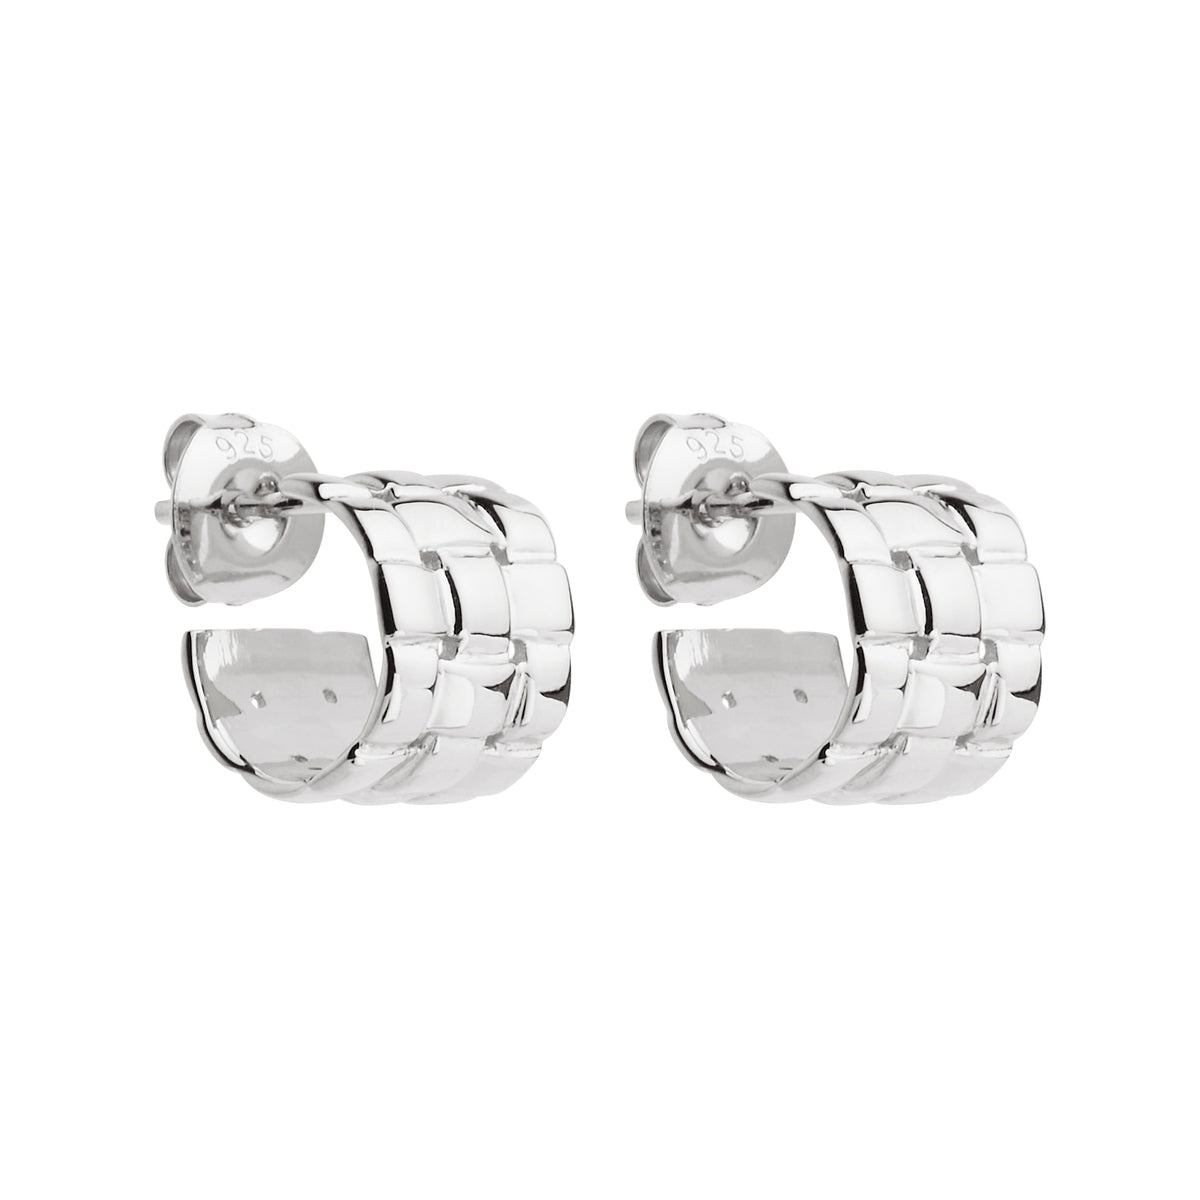 Sterling silver hoop earring with Woven pattern